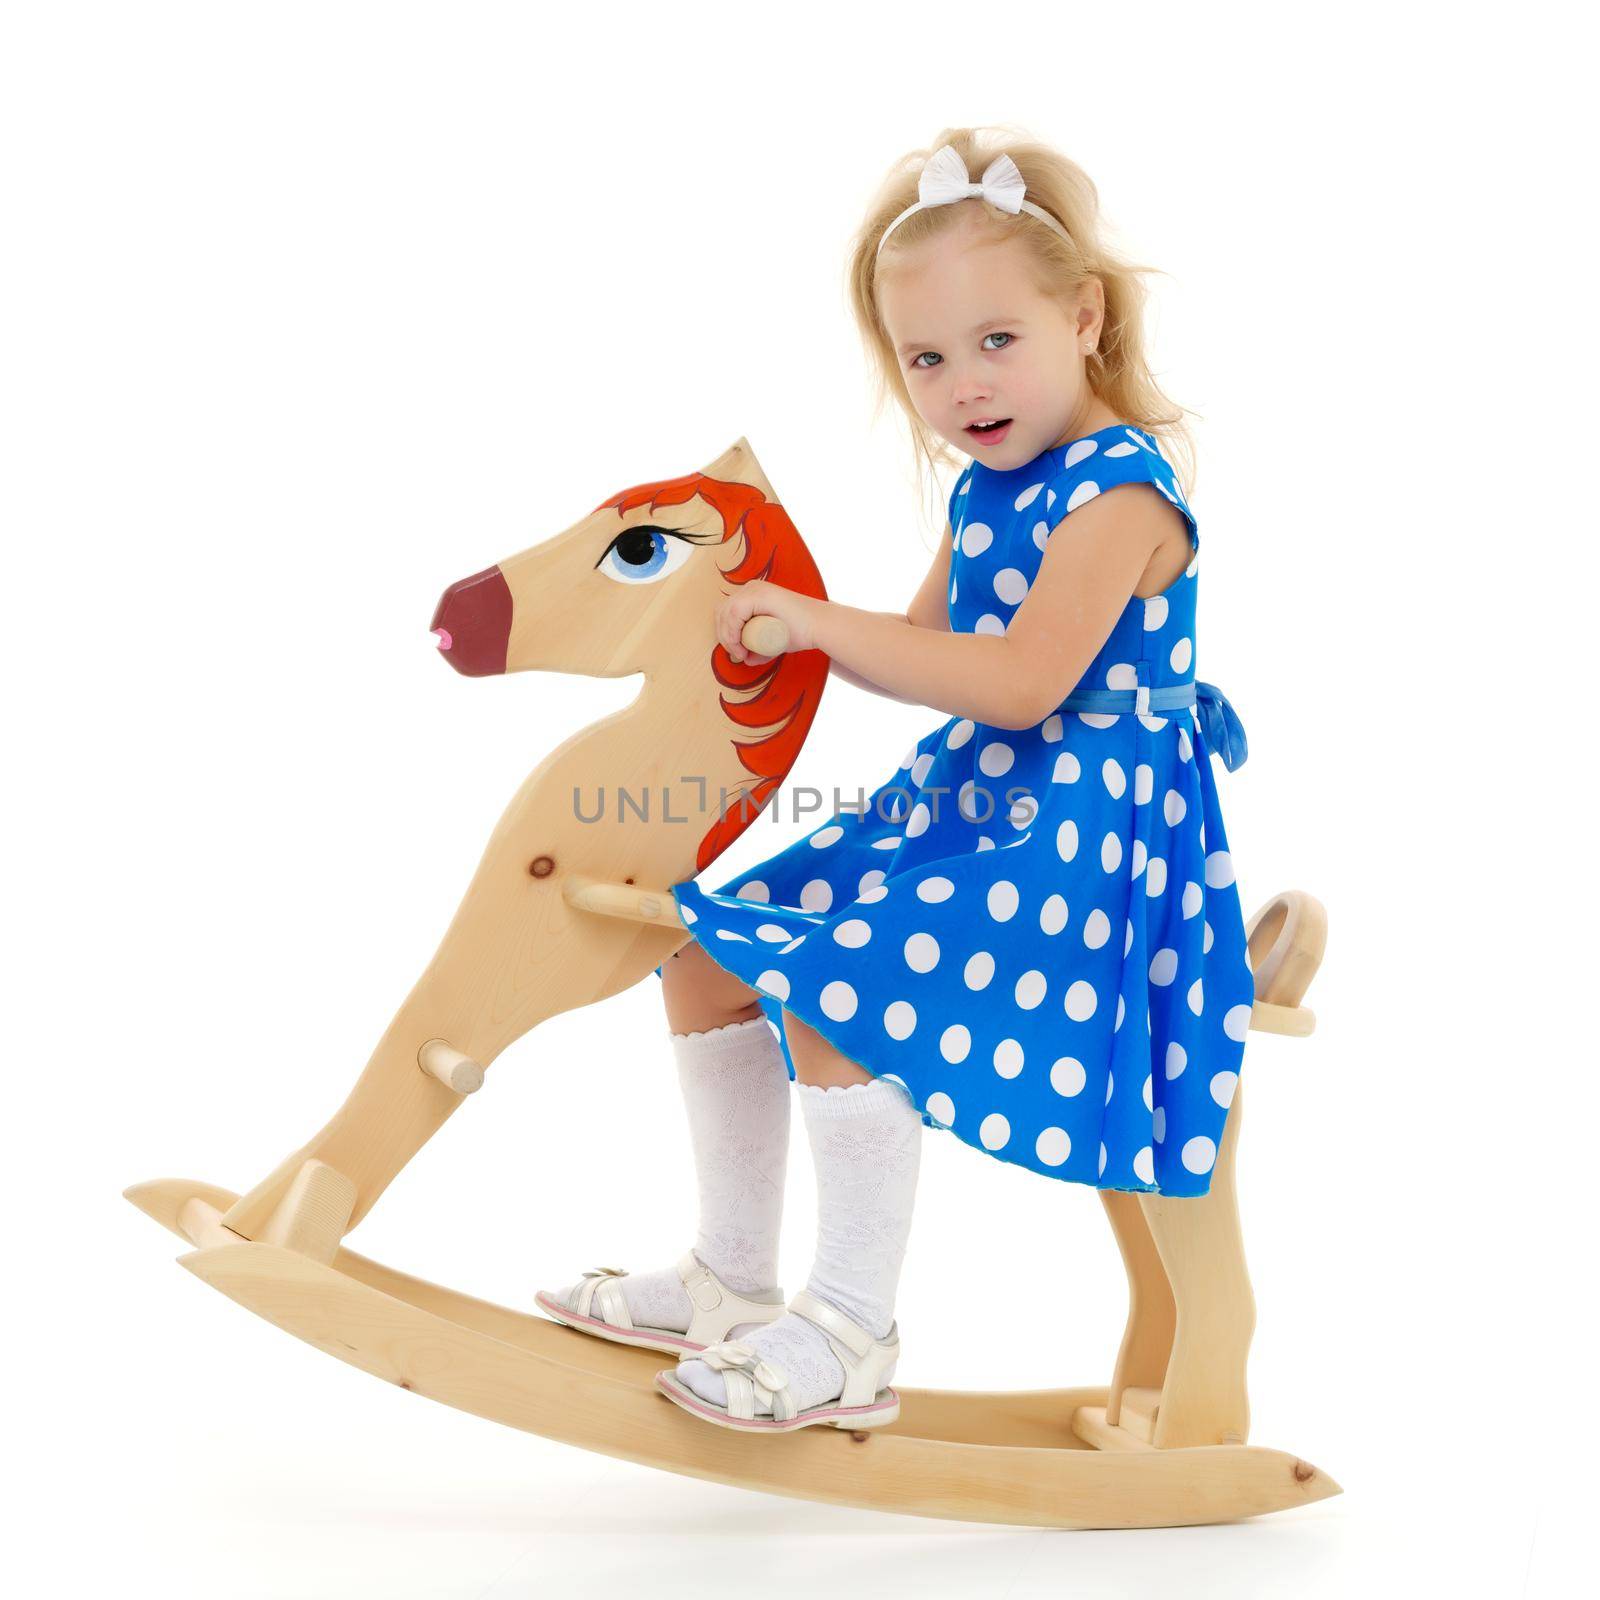 Girl swinging on a wooden horse. by kolesnikov_studio